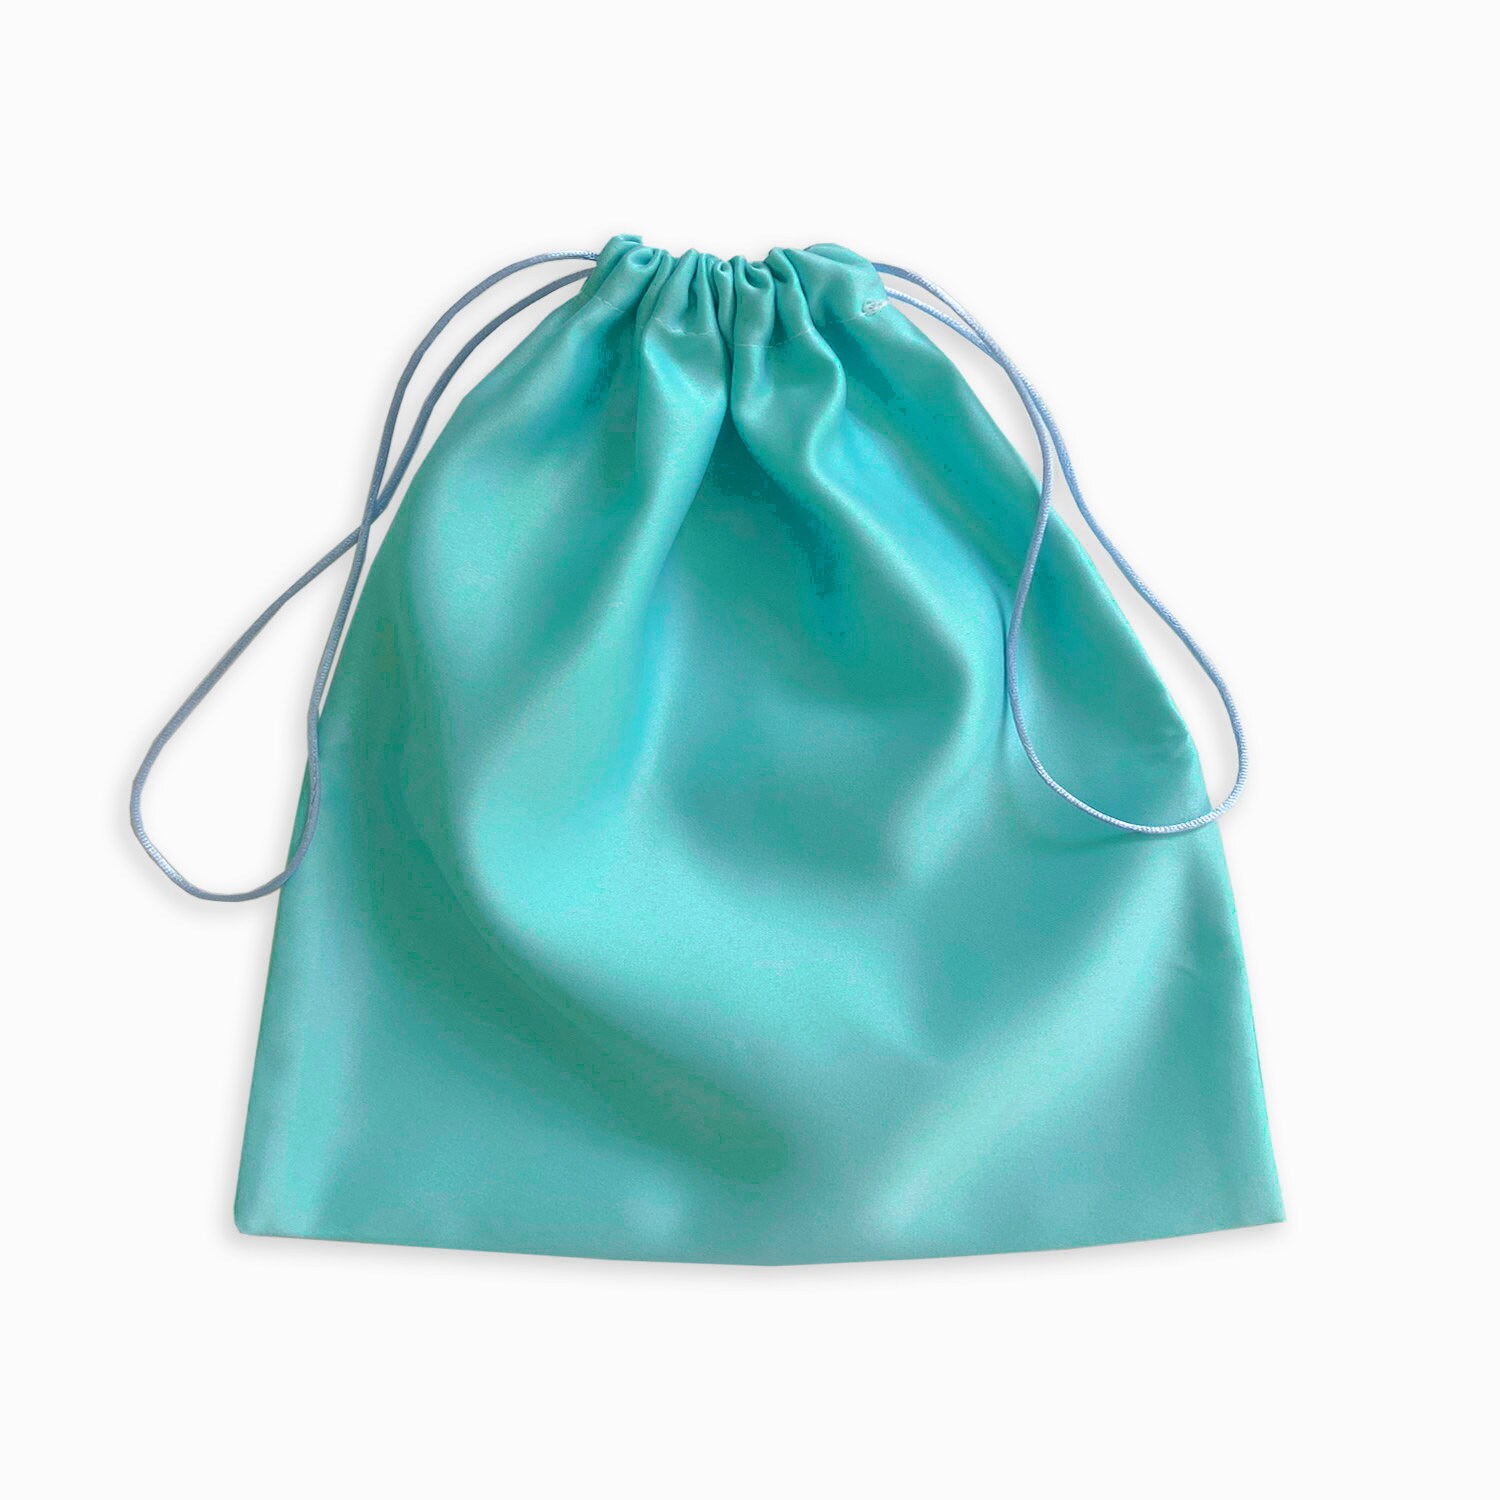 Aqua Teal Blue Satin Dust Bag Extra Small to Extra Large -  Denmark